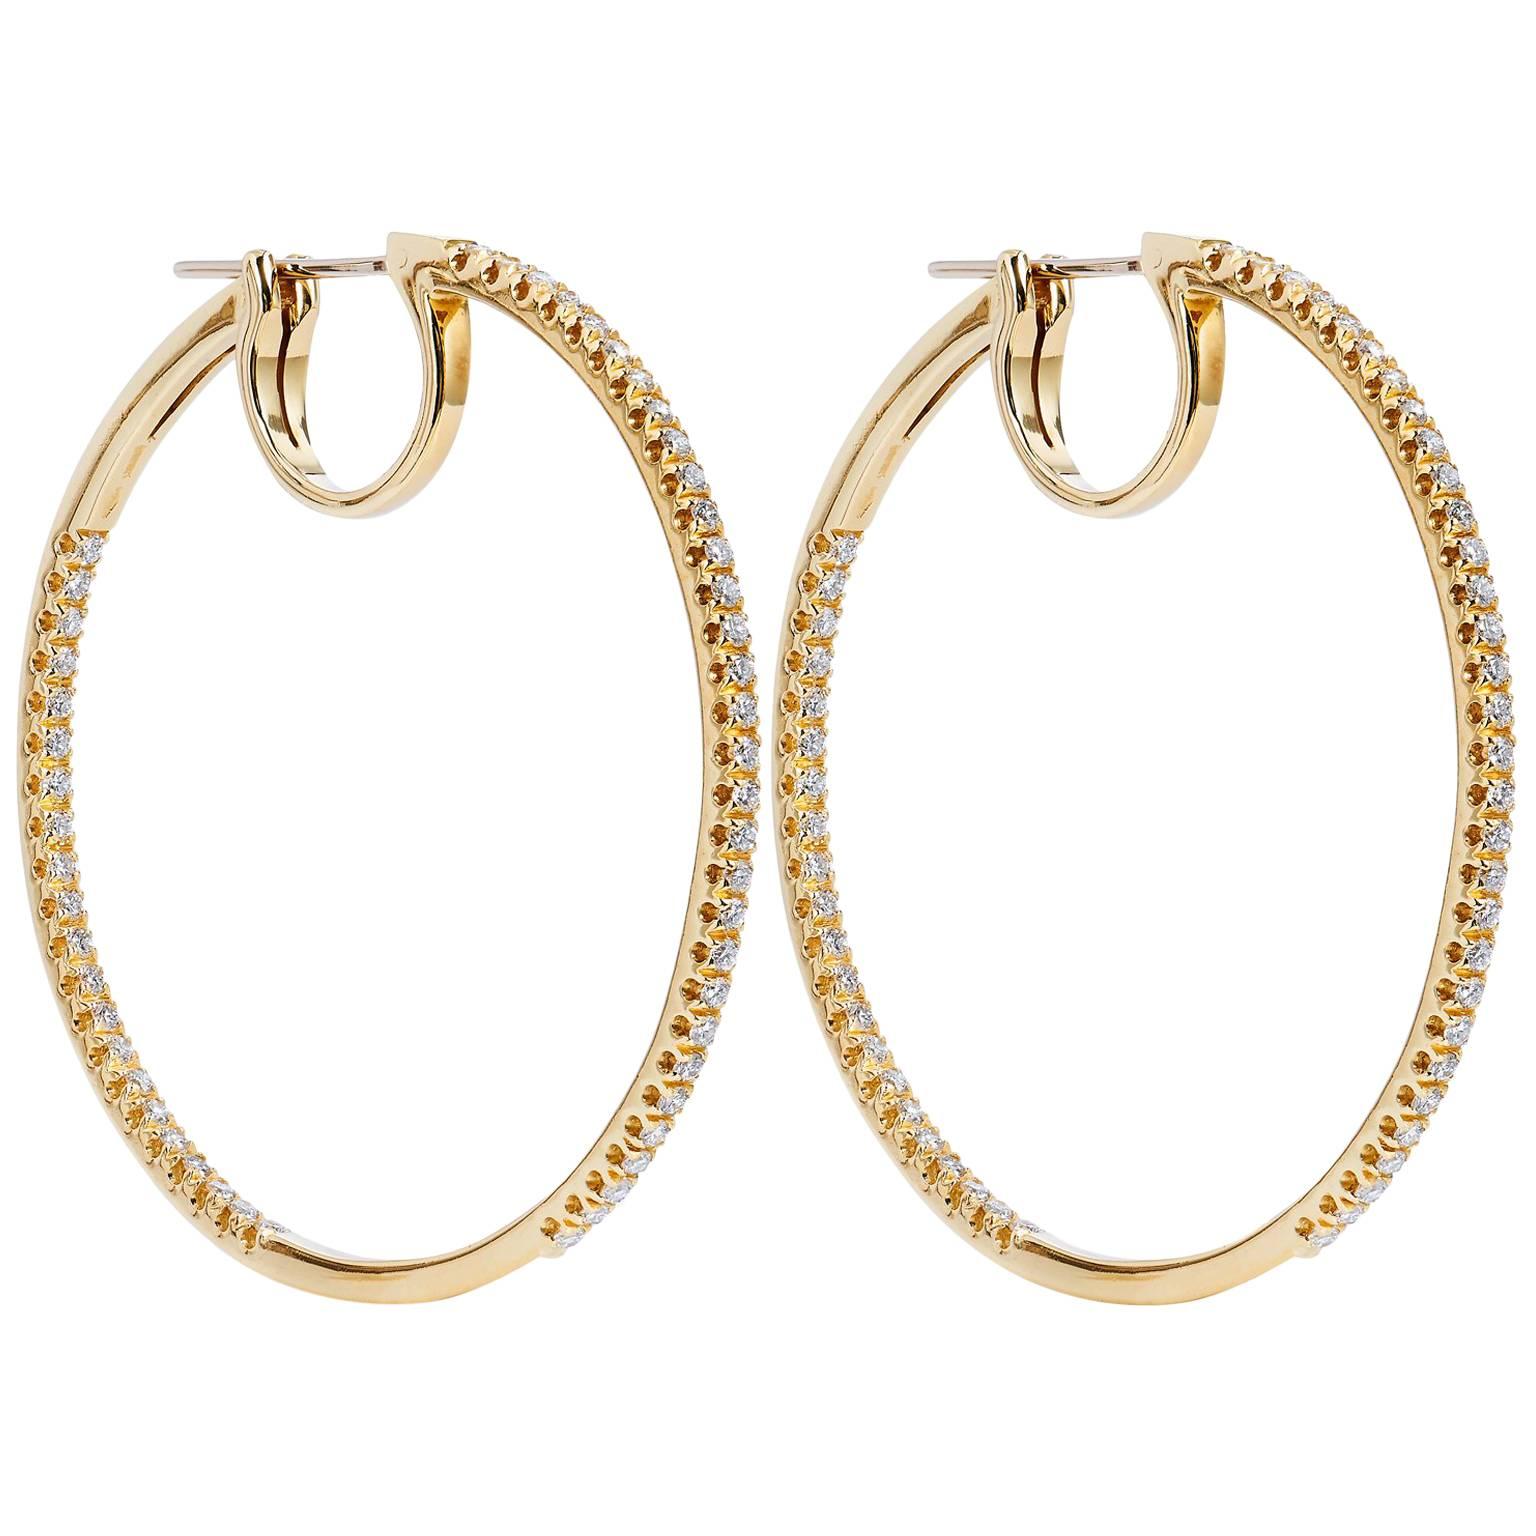 1.75 Carat Diamond 18 Karat Yellow Gold Italian Hoop Earrings